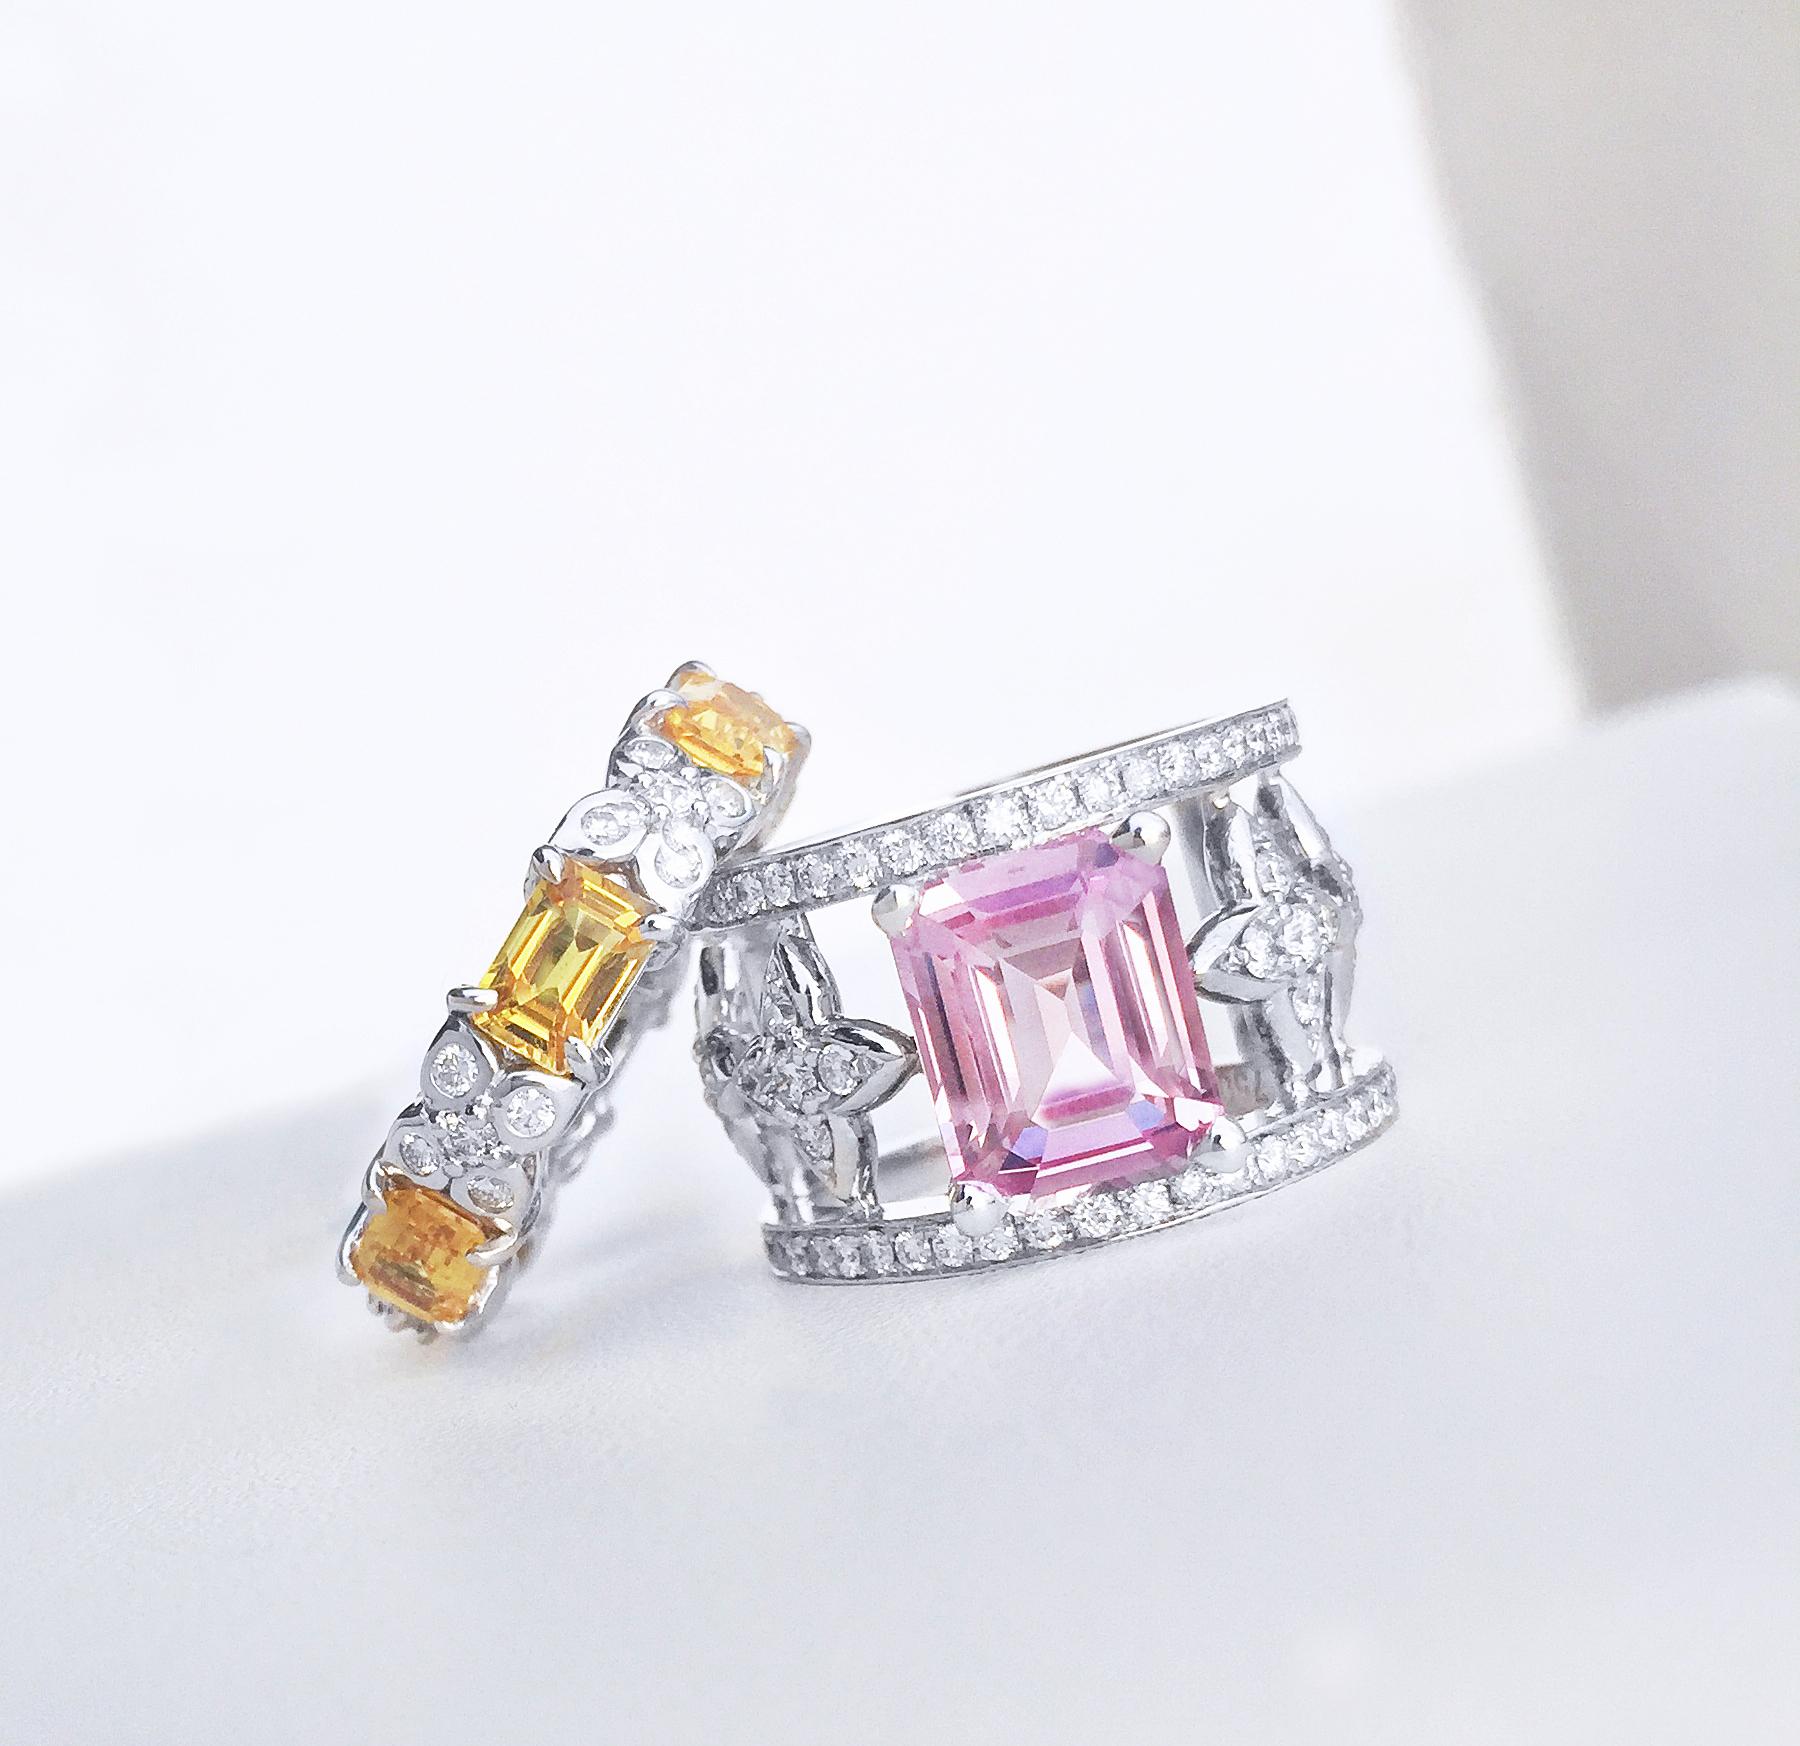 Women's JdJ Couture Emerald Cut Pink Sapphire and Diamond Ring in 18 Karat White Gold